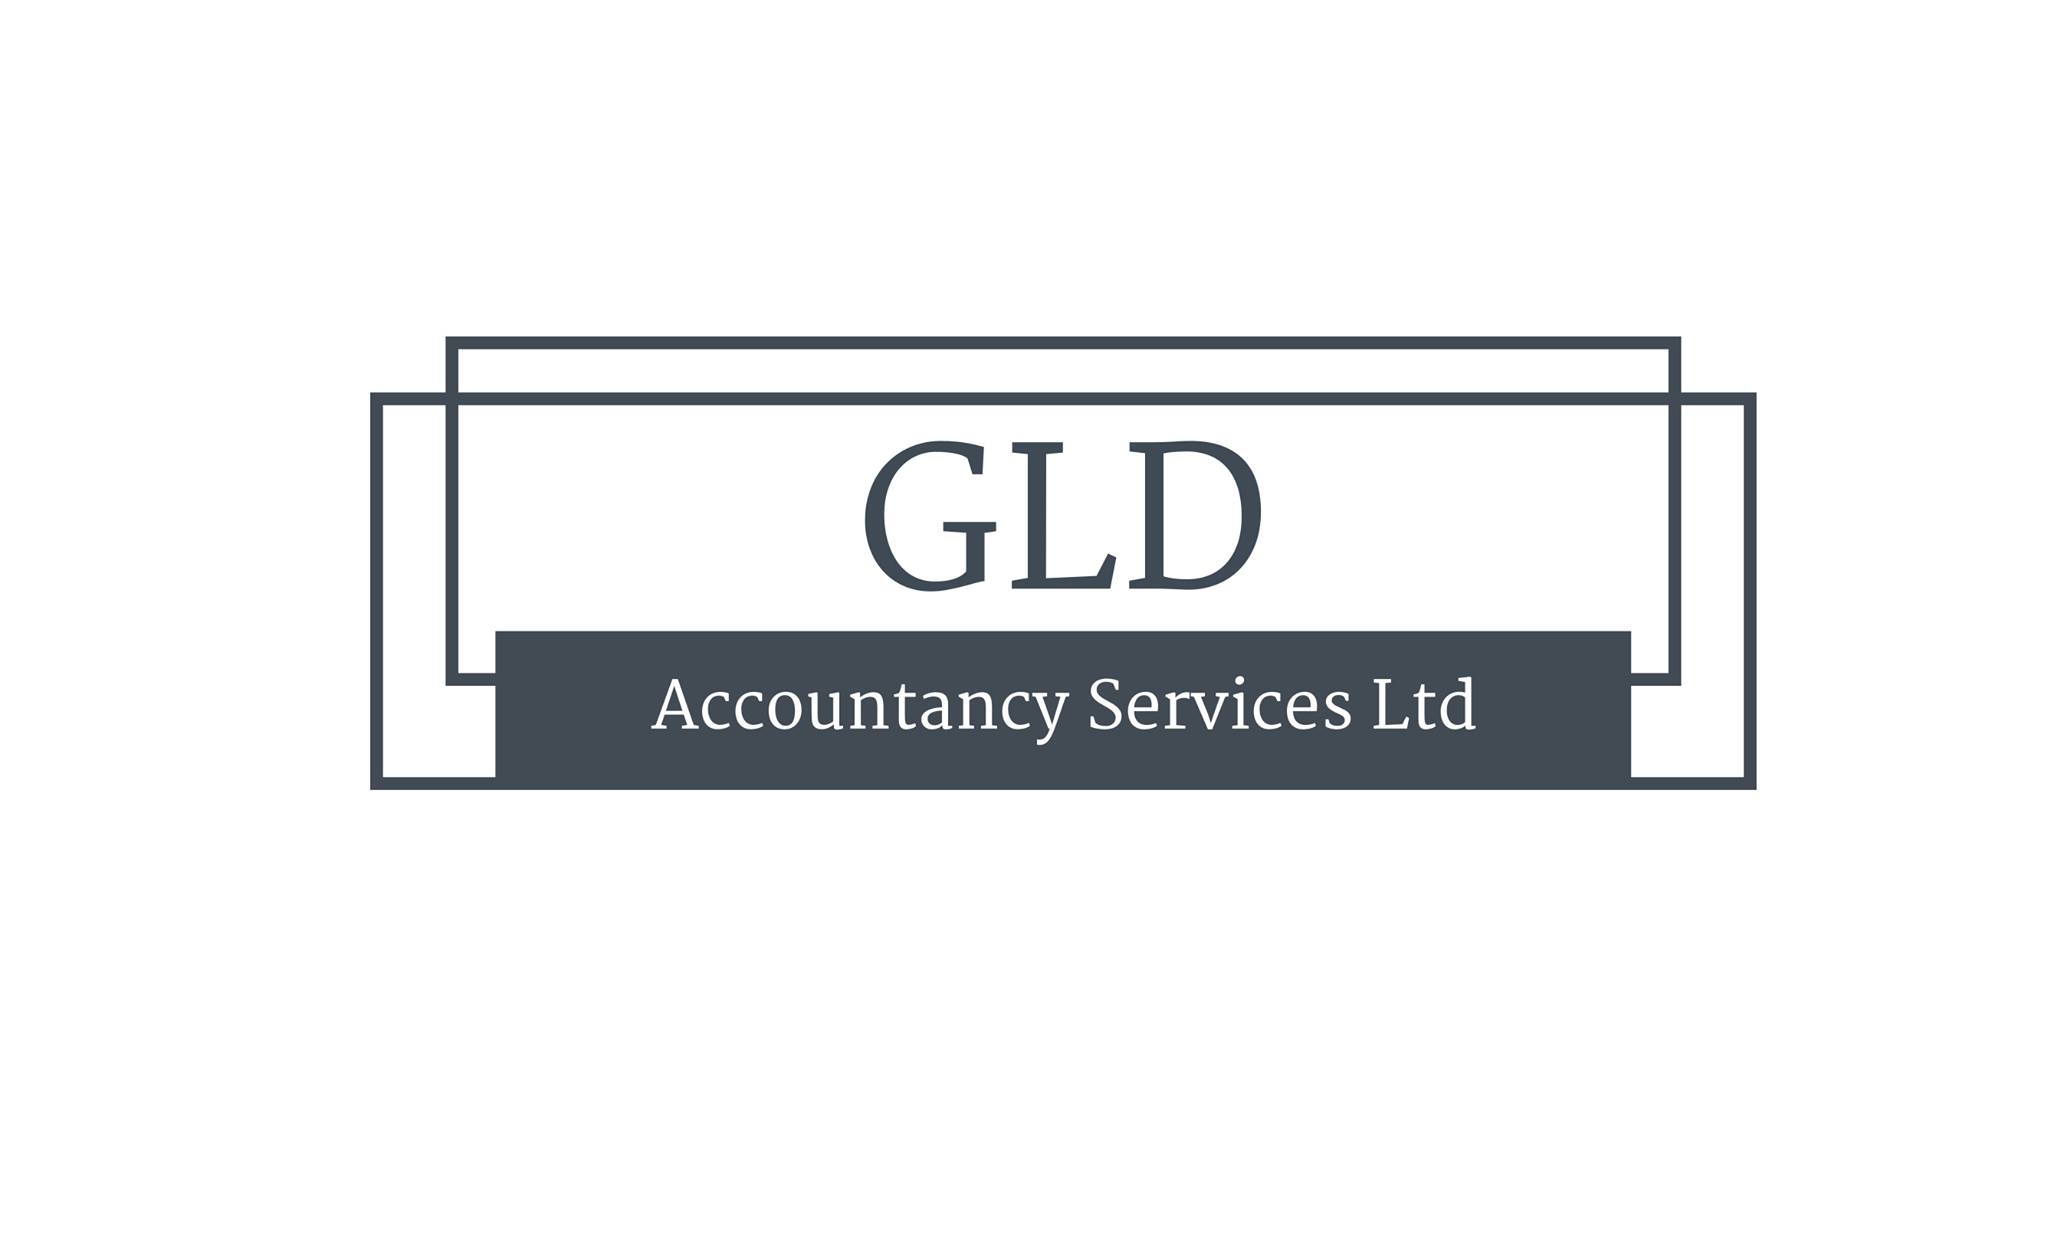 GLD Accountancy Services Ltd